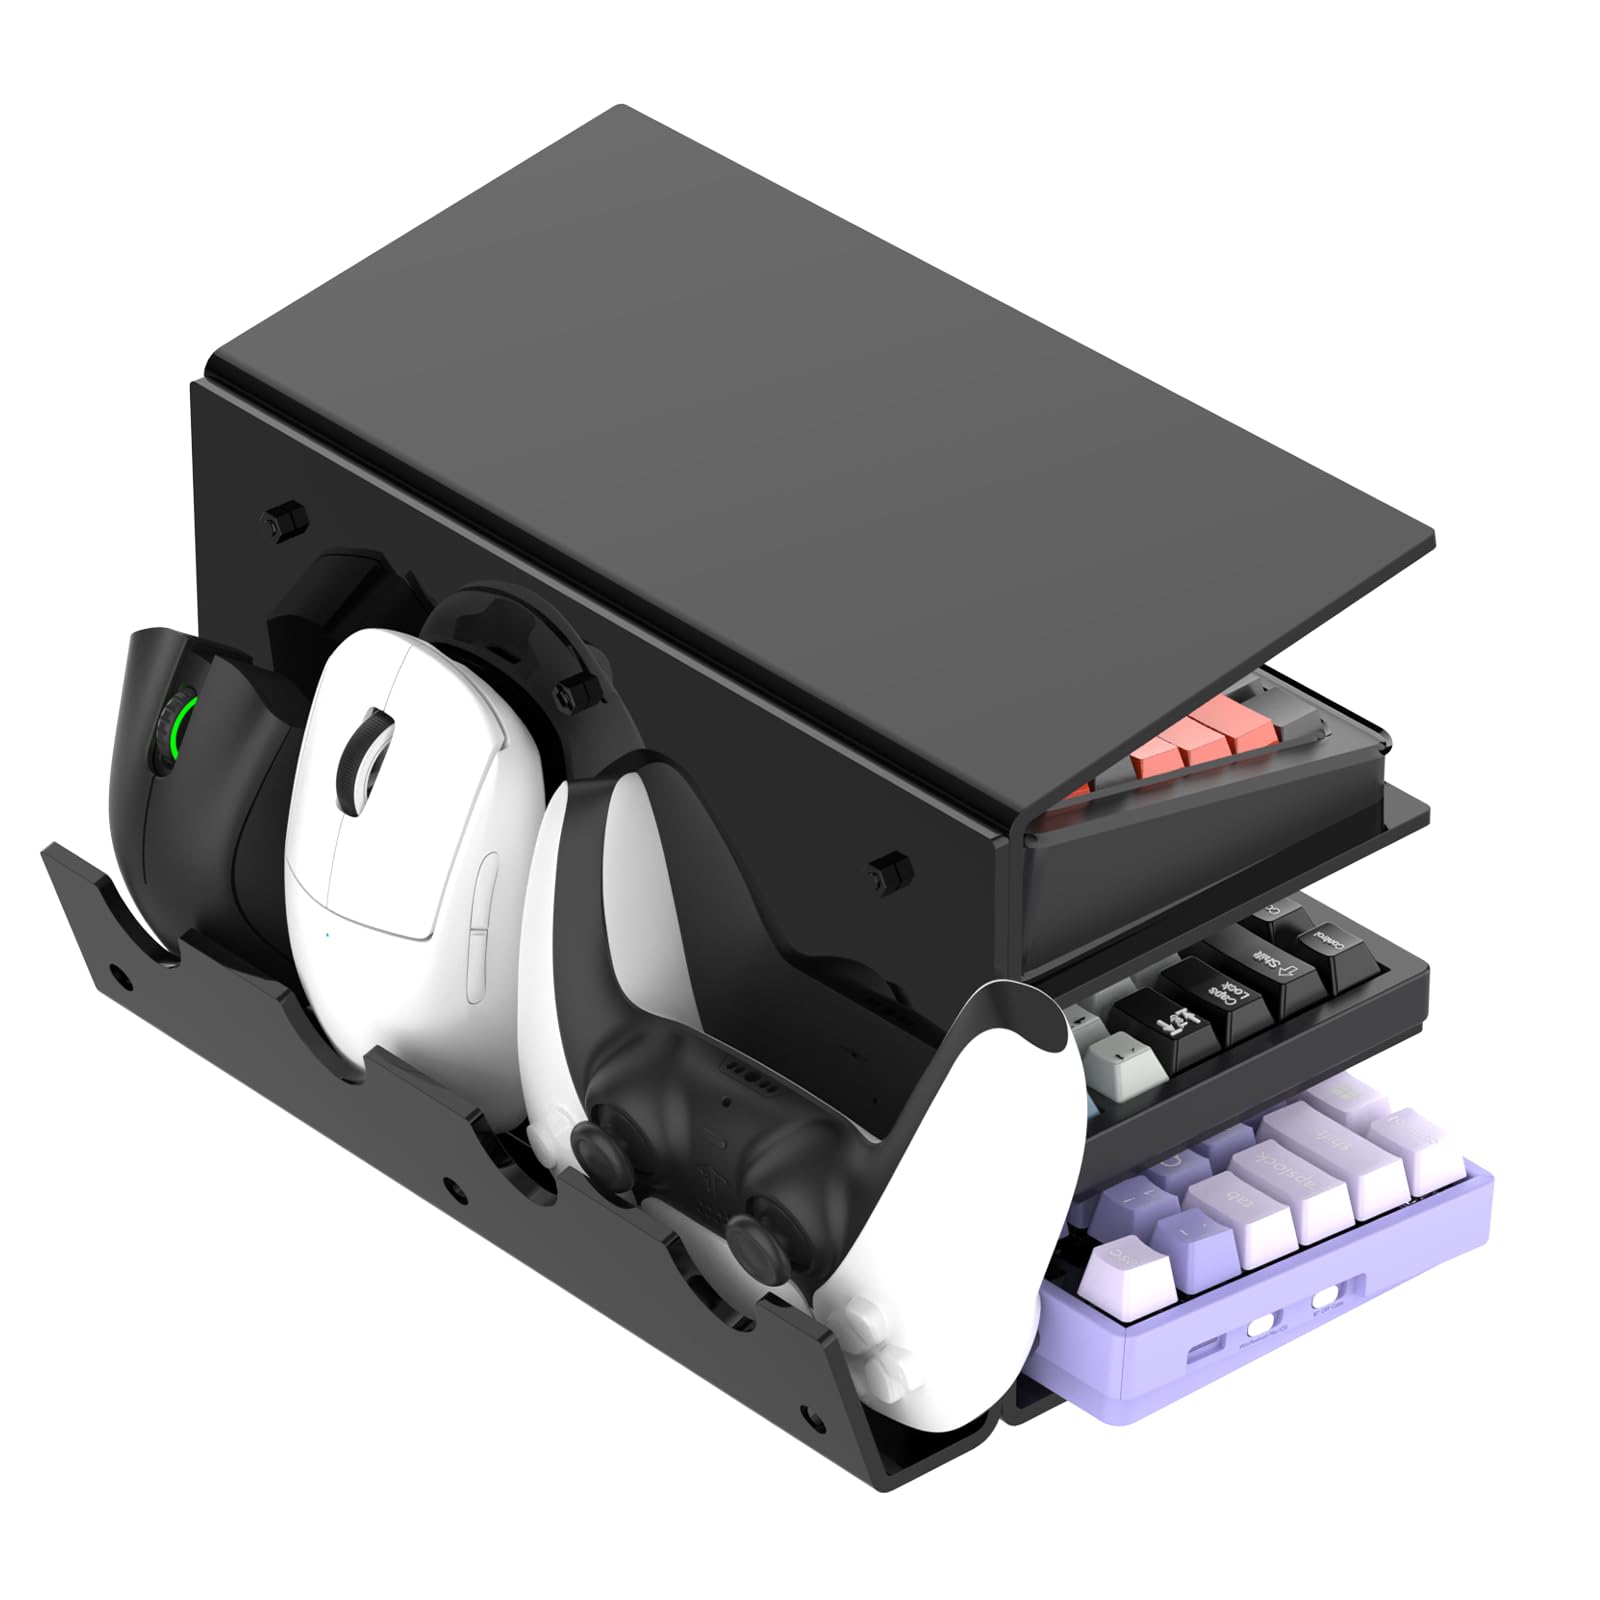 Acrylic Keyboard Mouse Storage Rack - 3-Tier Mechanical Keyboard Display Stand, Dustproof Desktop Holder, Clear